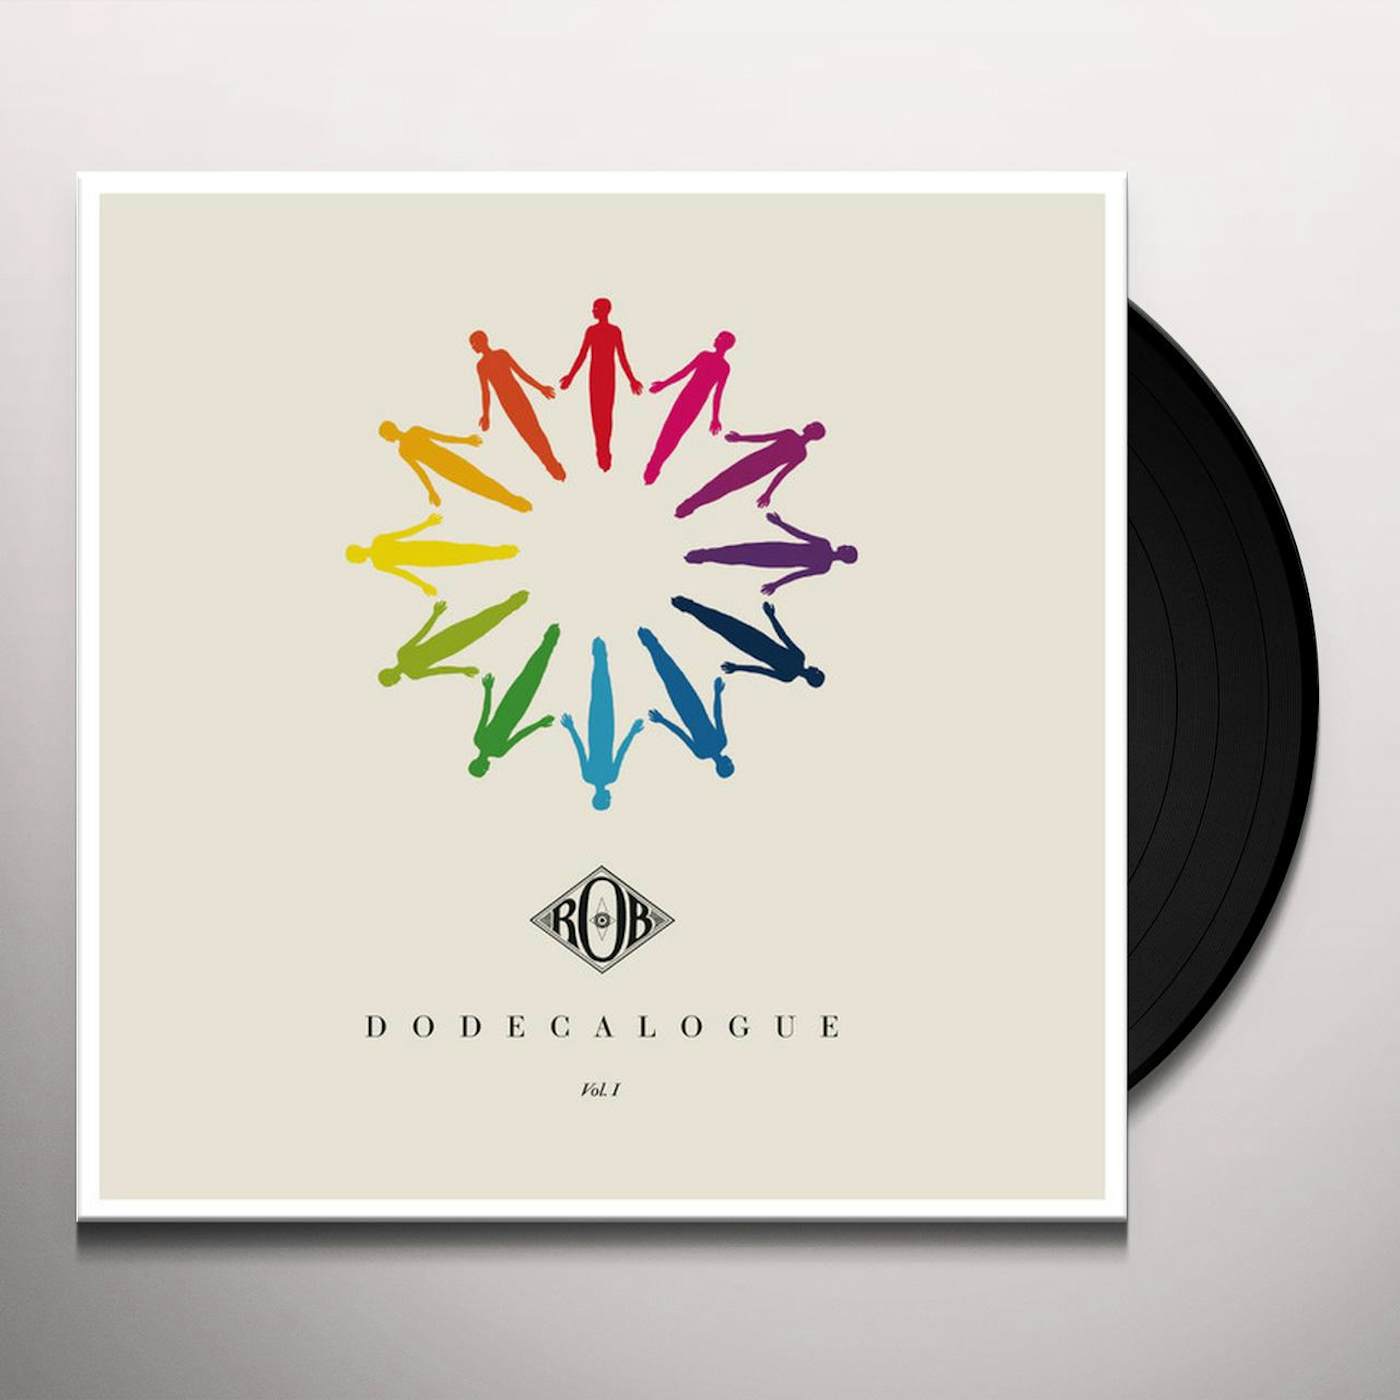 Rob VOL. 1-DODECALOGUE-PIERRE Vinyl Record - Canada Release